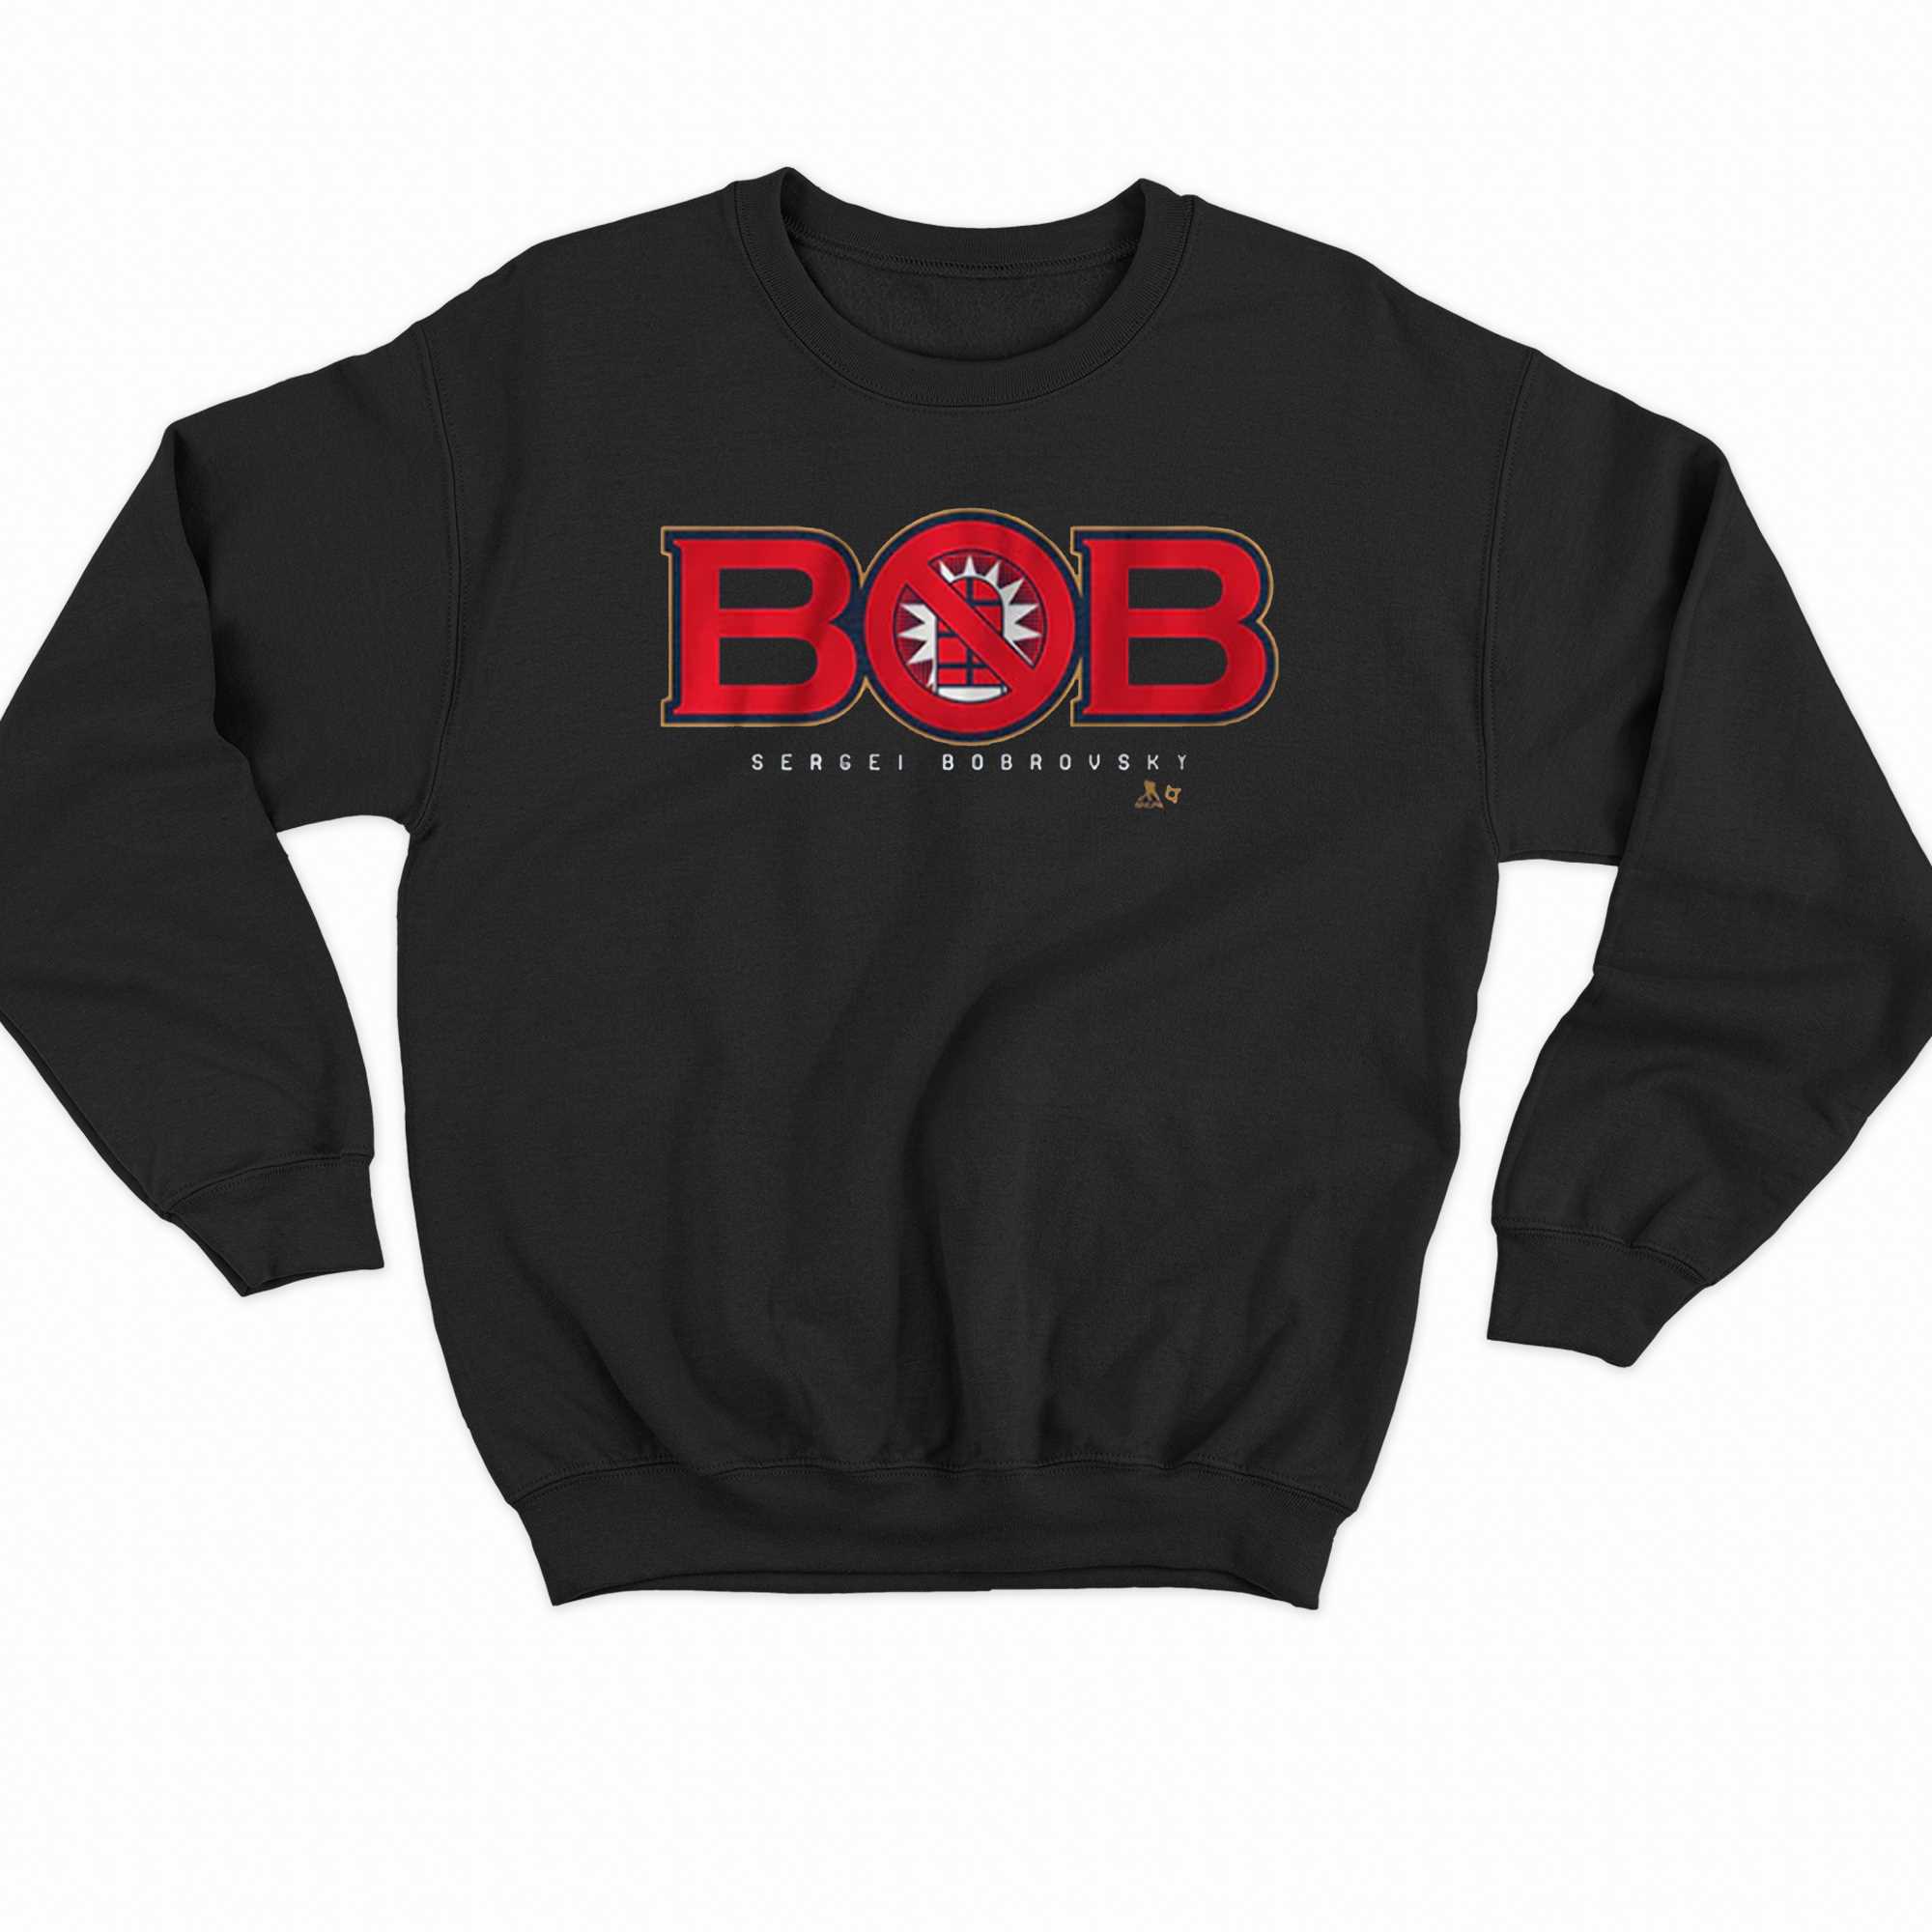 Sergei Bobrovsky Bob Shirt 